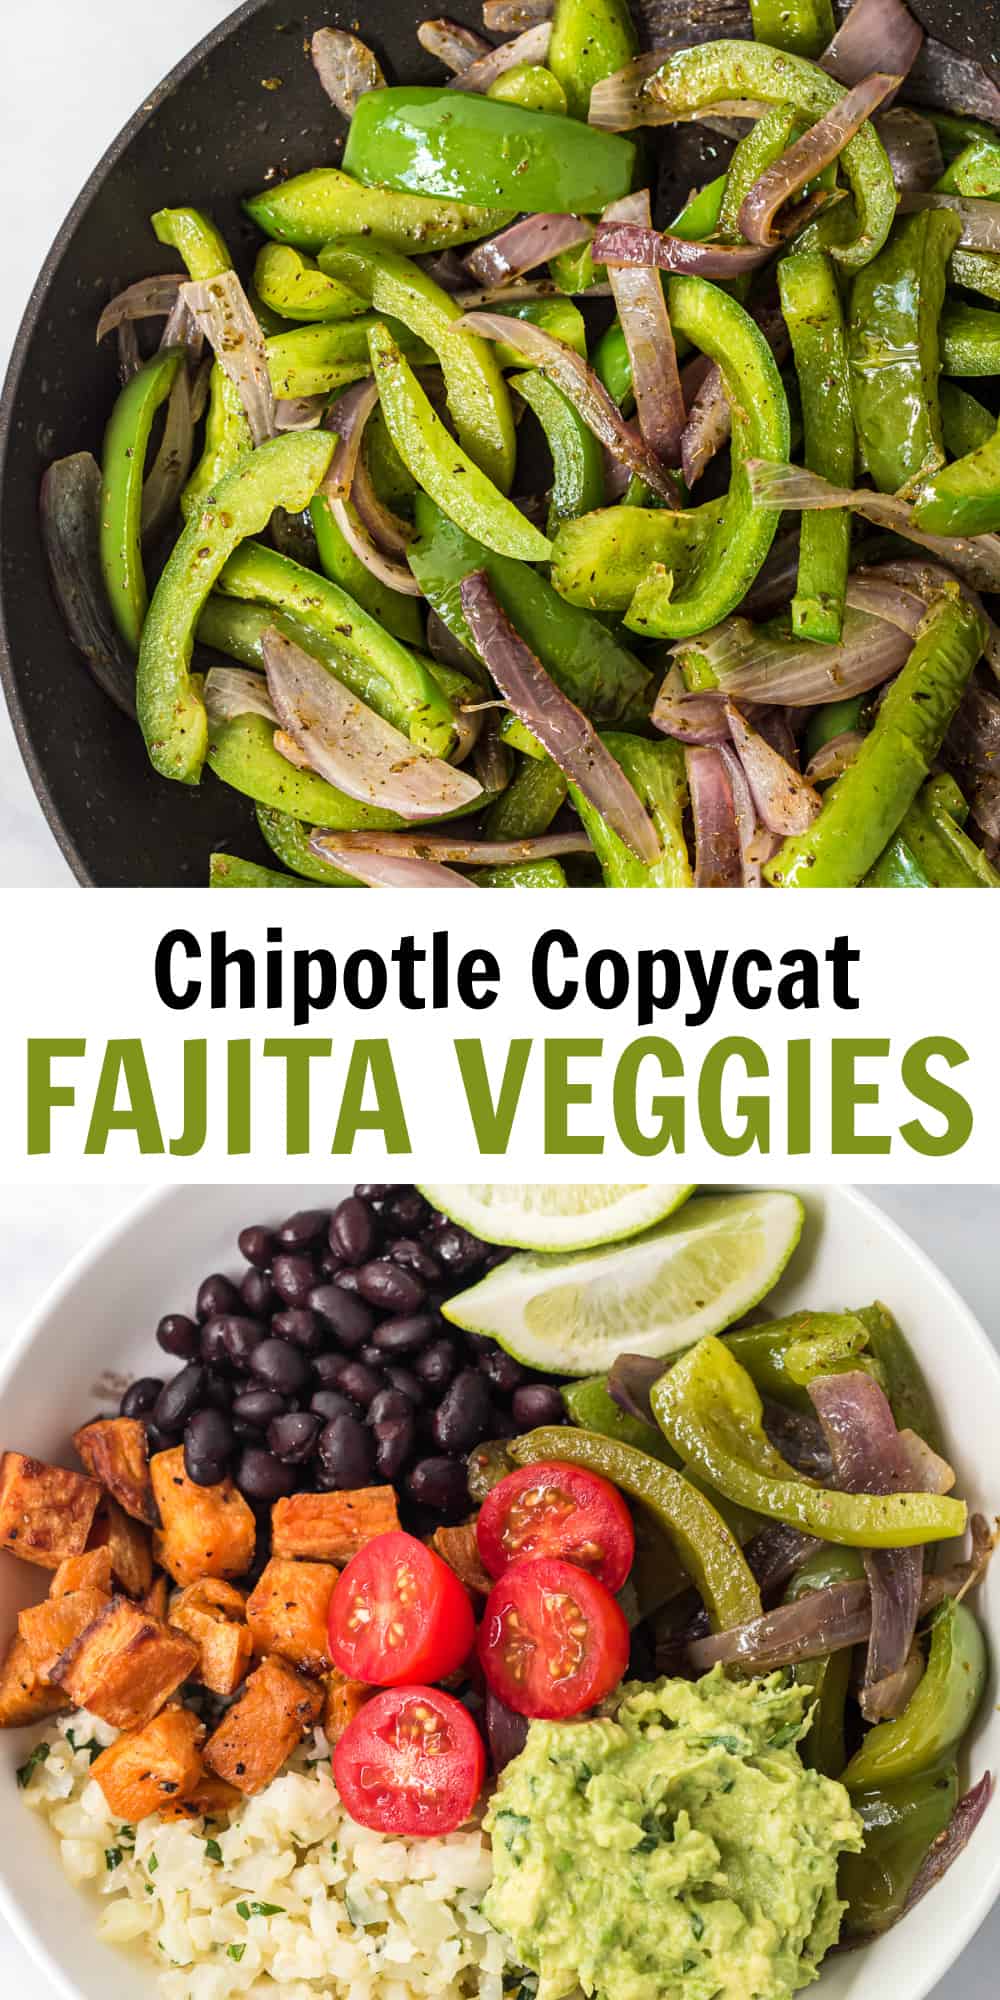 image with text "chipotle copycat fajita veggies"